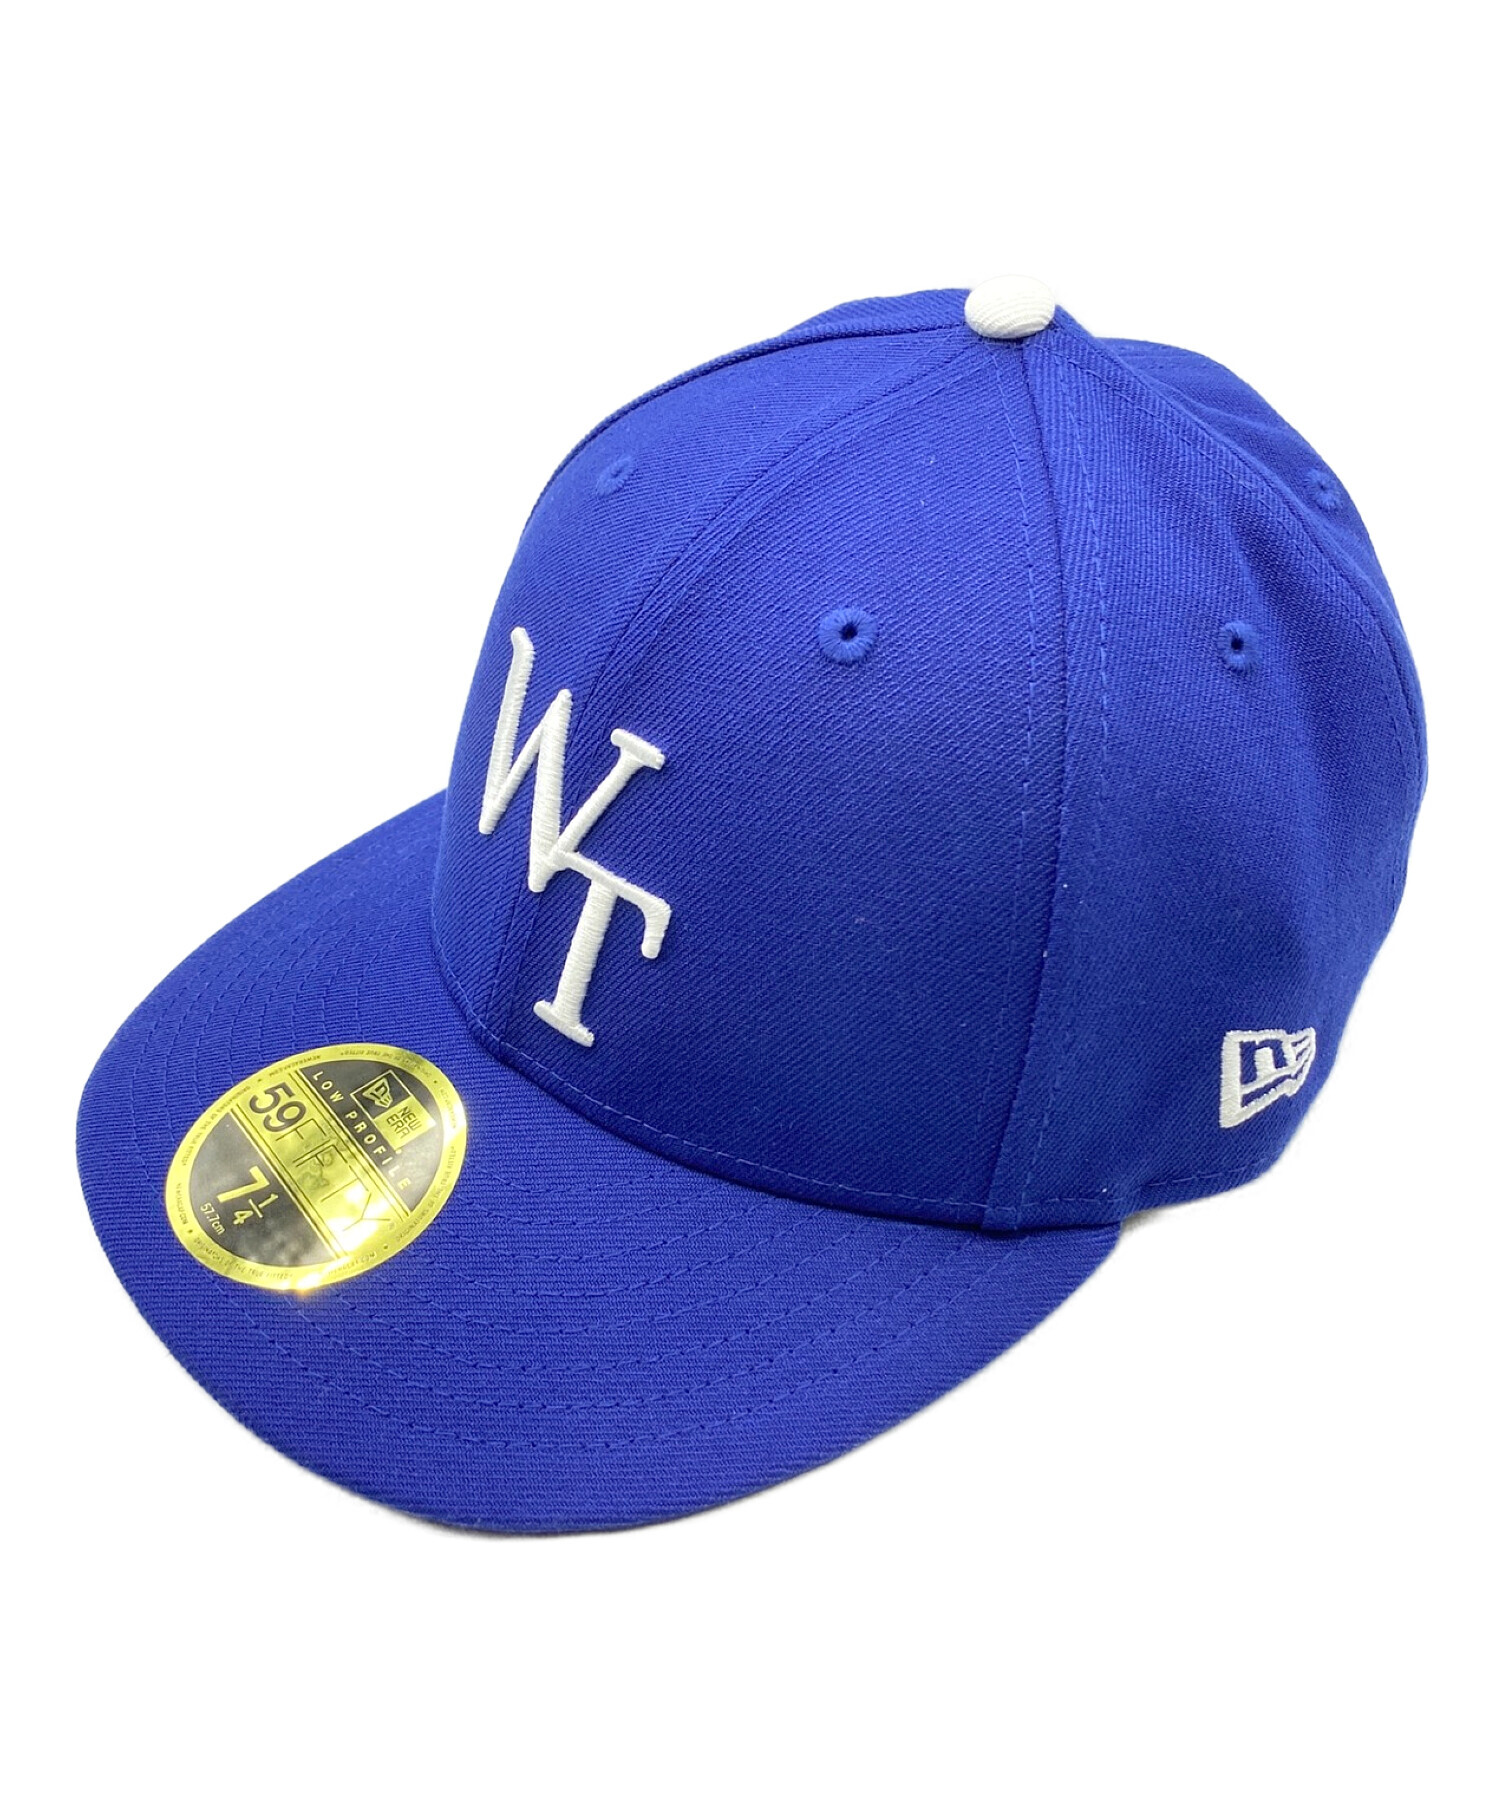 WTAPS (ダブルタップス) New Era (ニューエラ) 59FIFTY LOW PROFILE CAP ブルー サイズ:7  1/4(57.7cm)